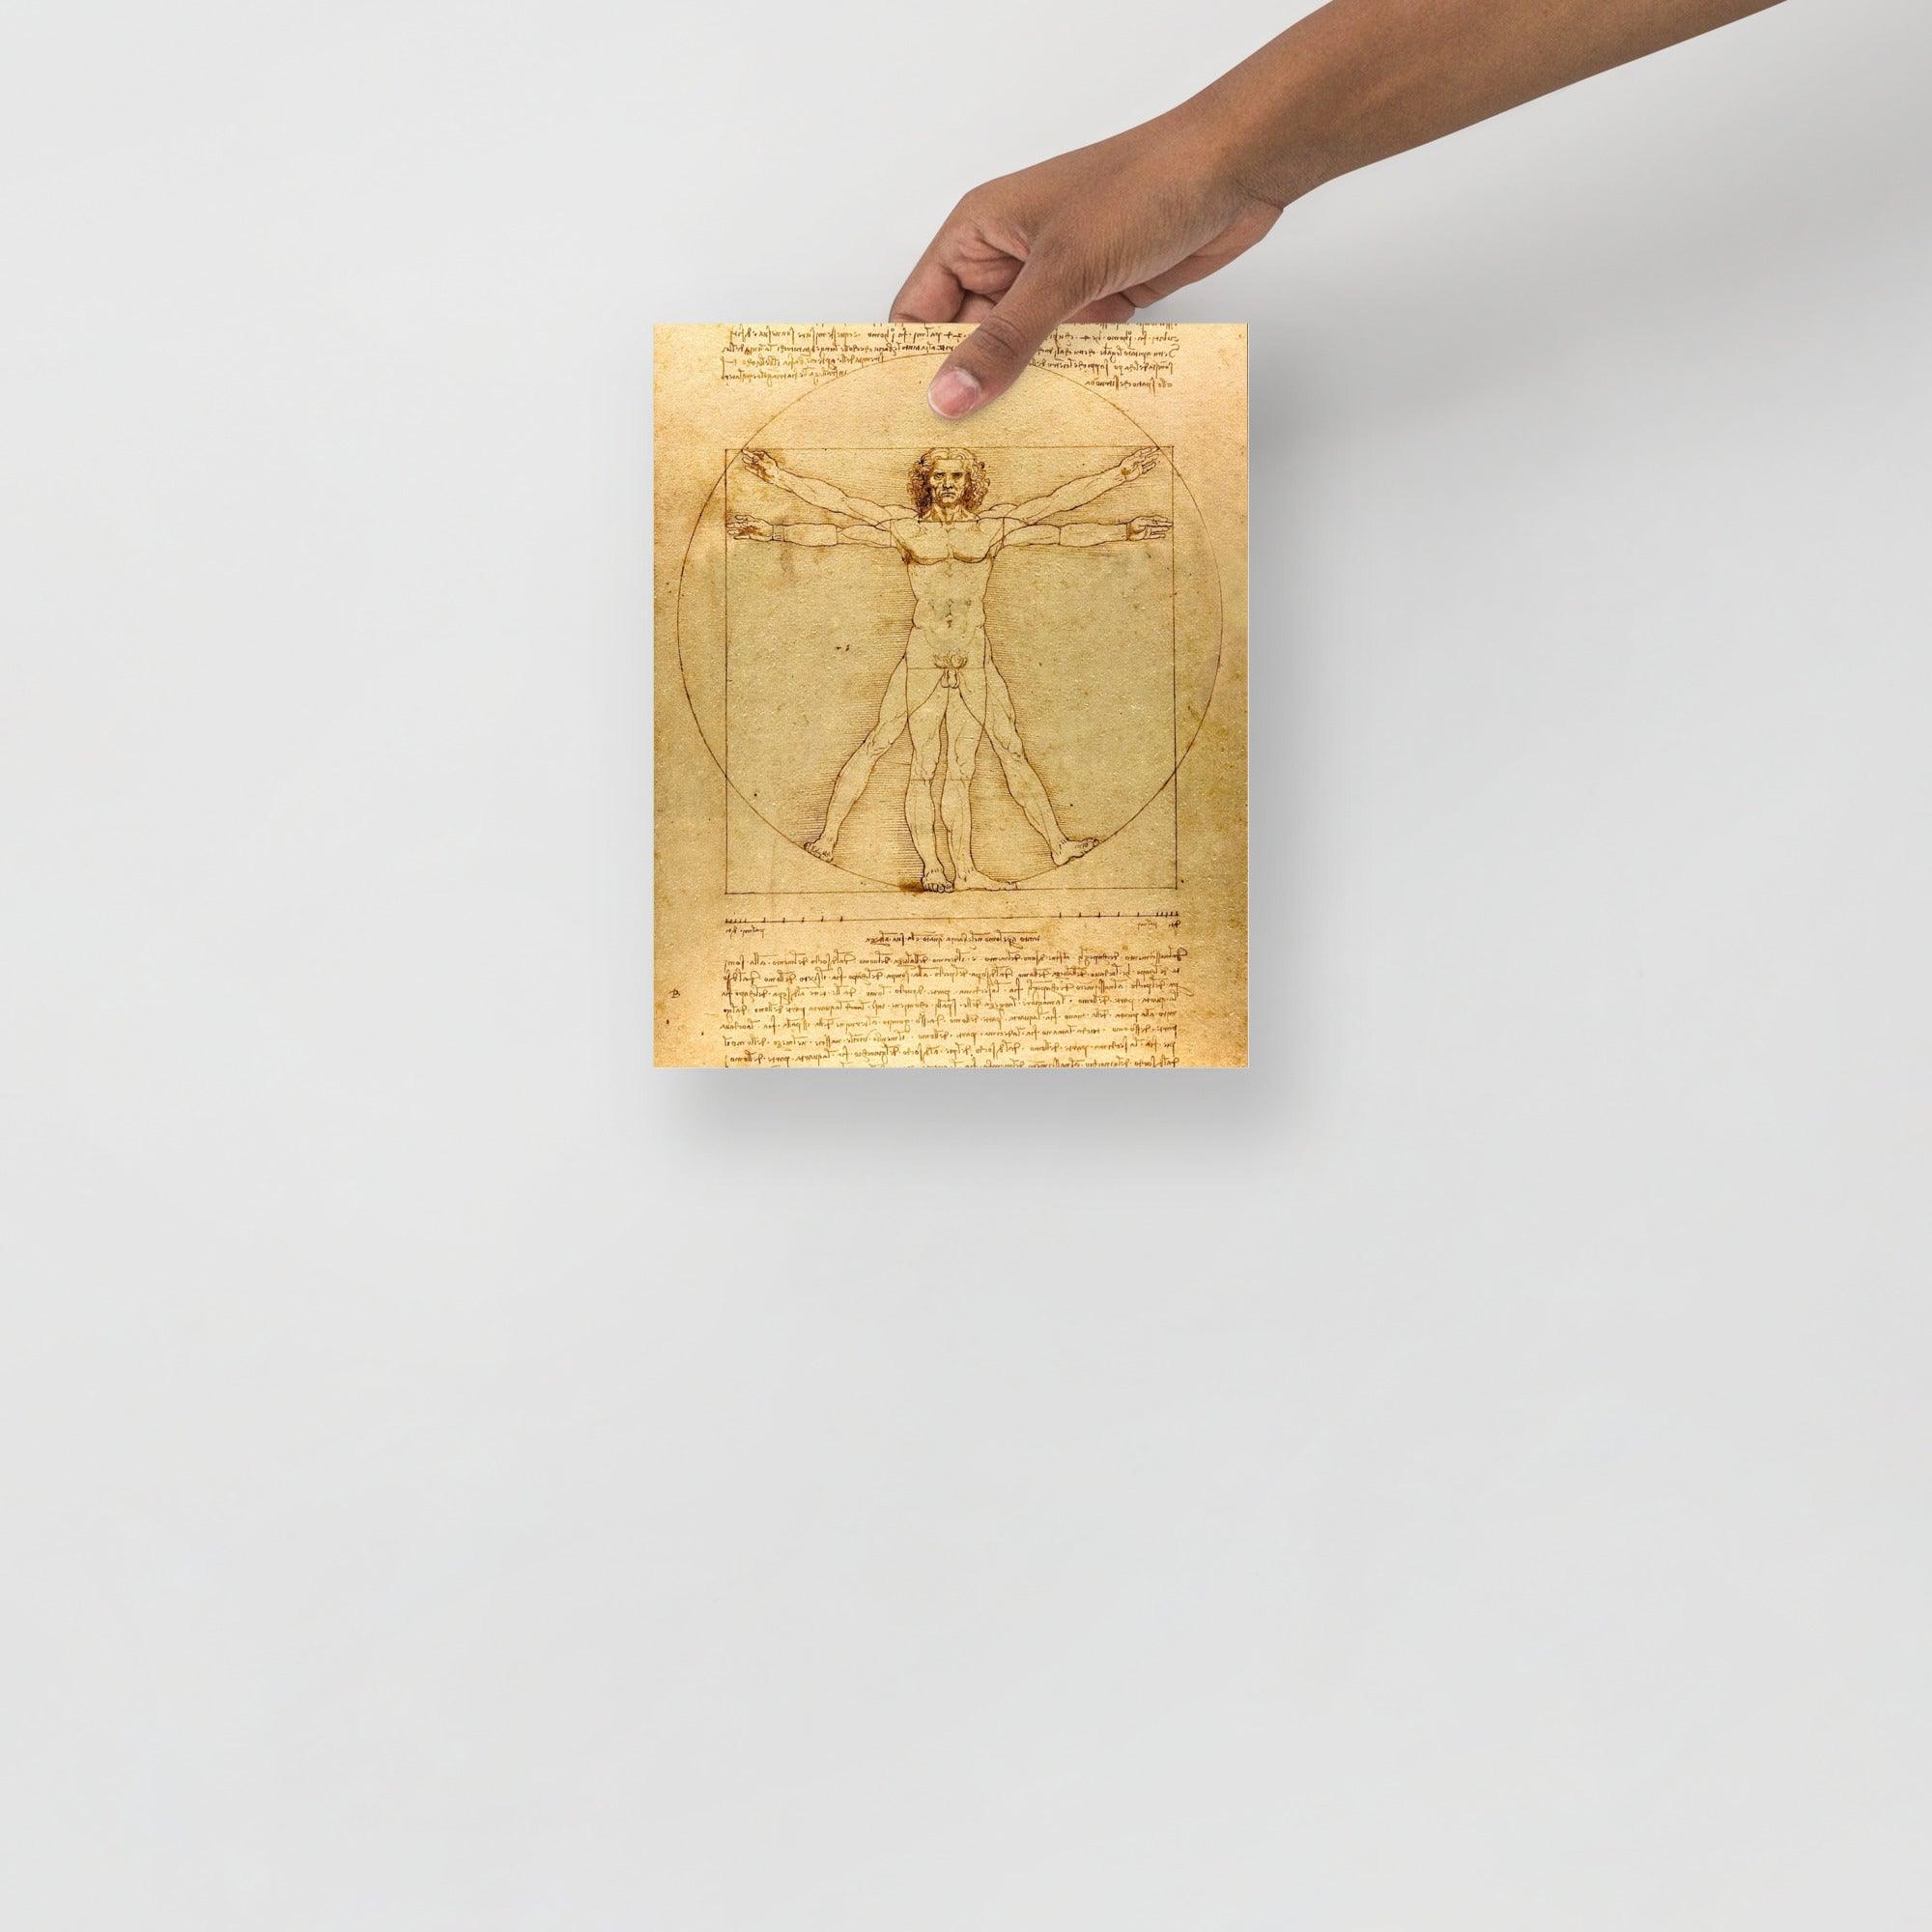 A Vitruvian Man by Leonardo da Vinci poster on a plain backdrop in size 8x10”.